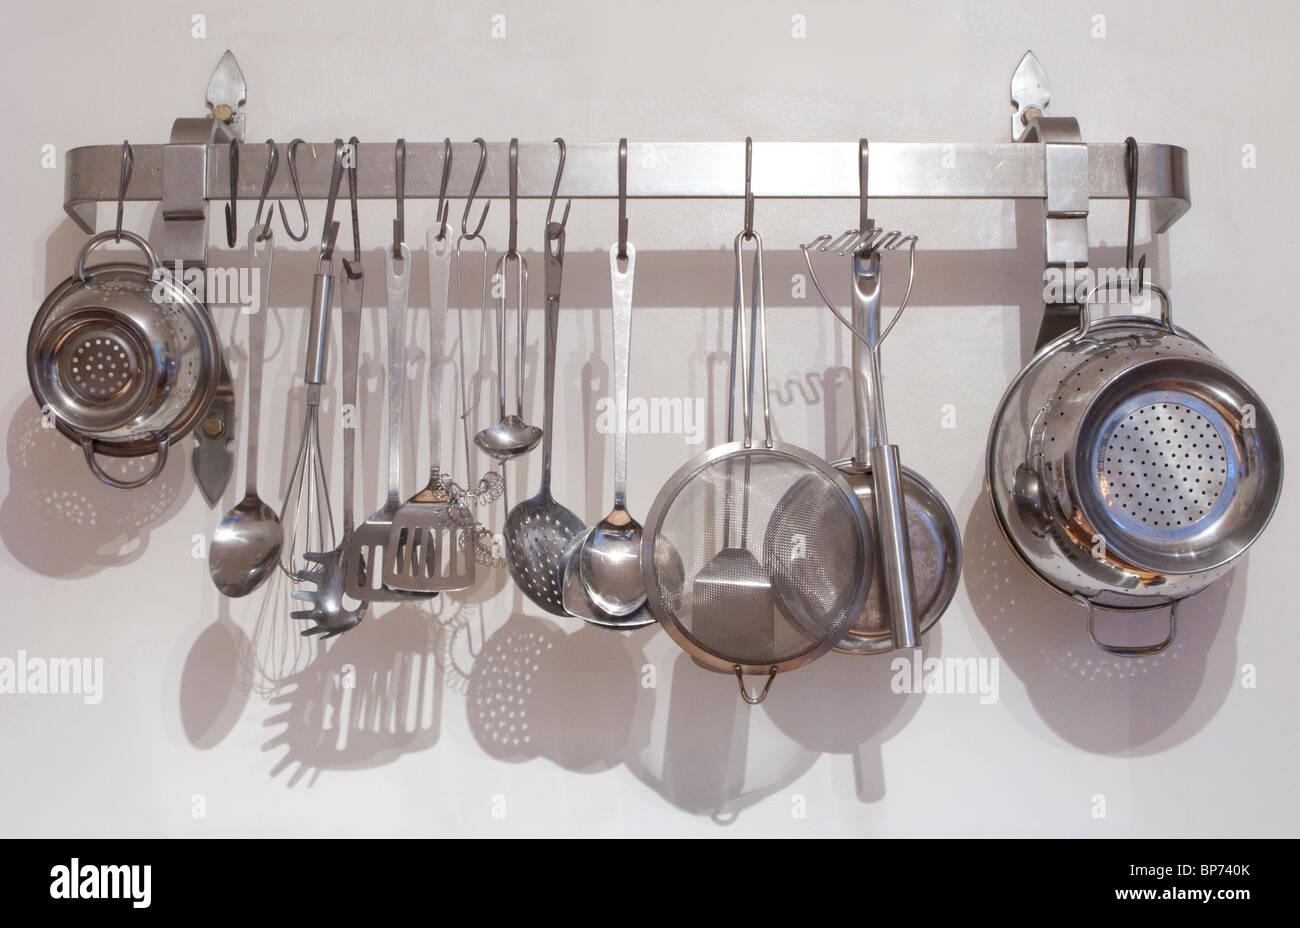 https://c8.alamy.com/comp/BP740K/cooking-utensils-cook-cooking-kitchen-rack-chef-tools-food-culinary-BP740K.jpg